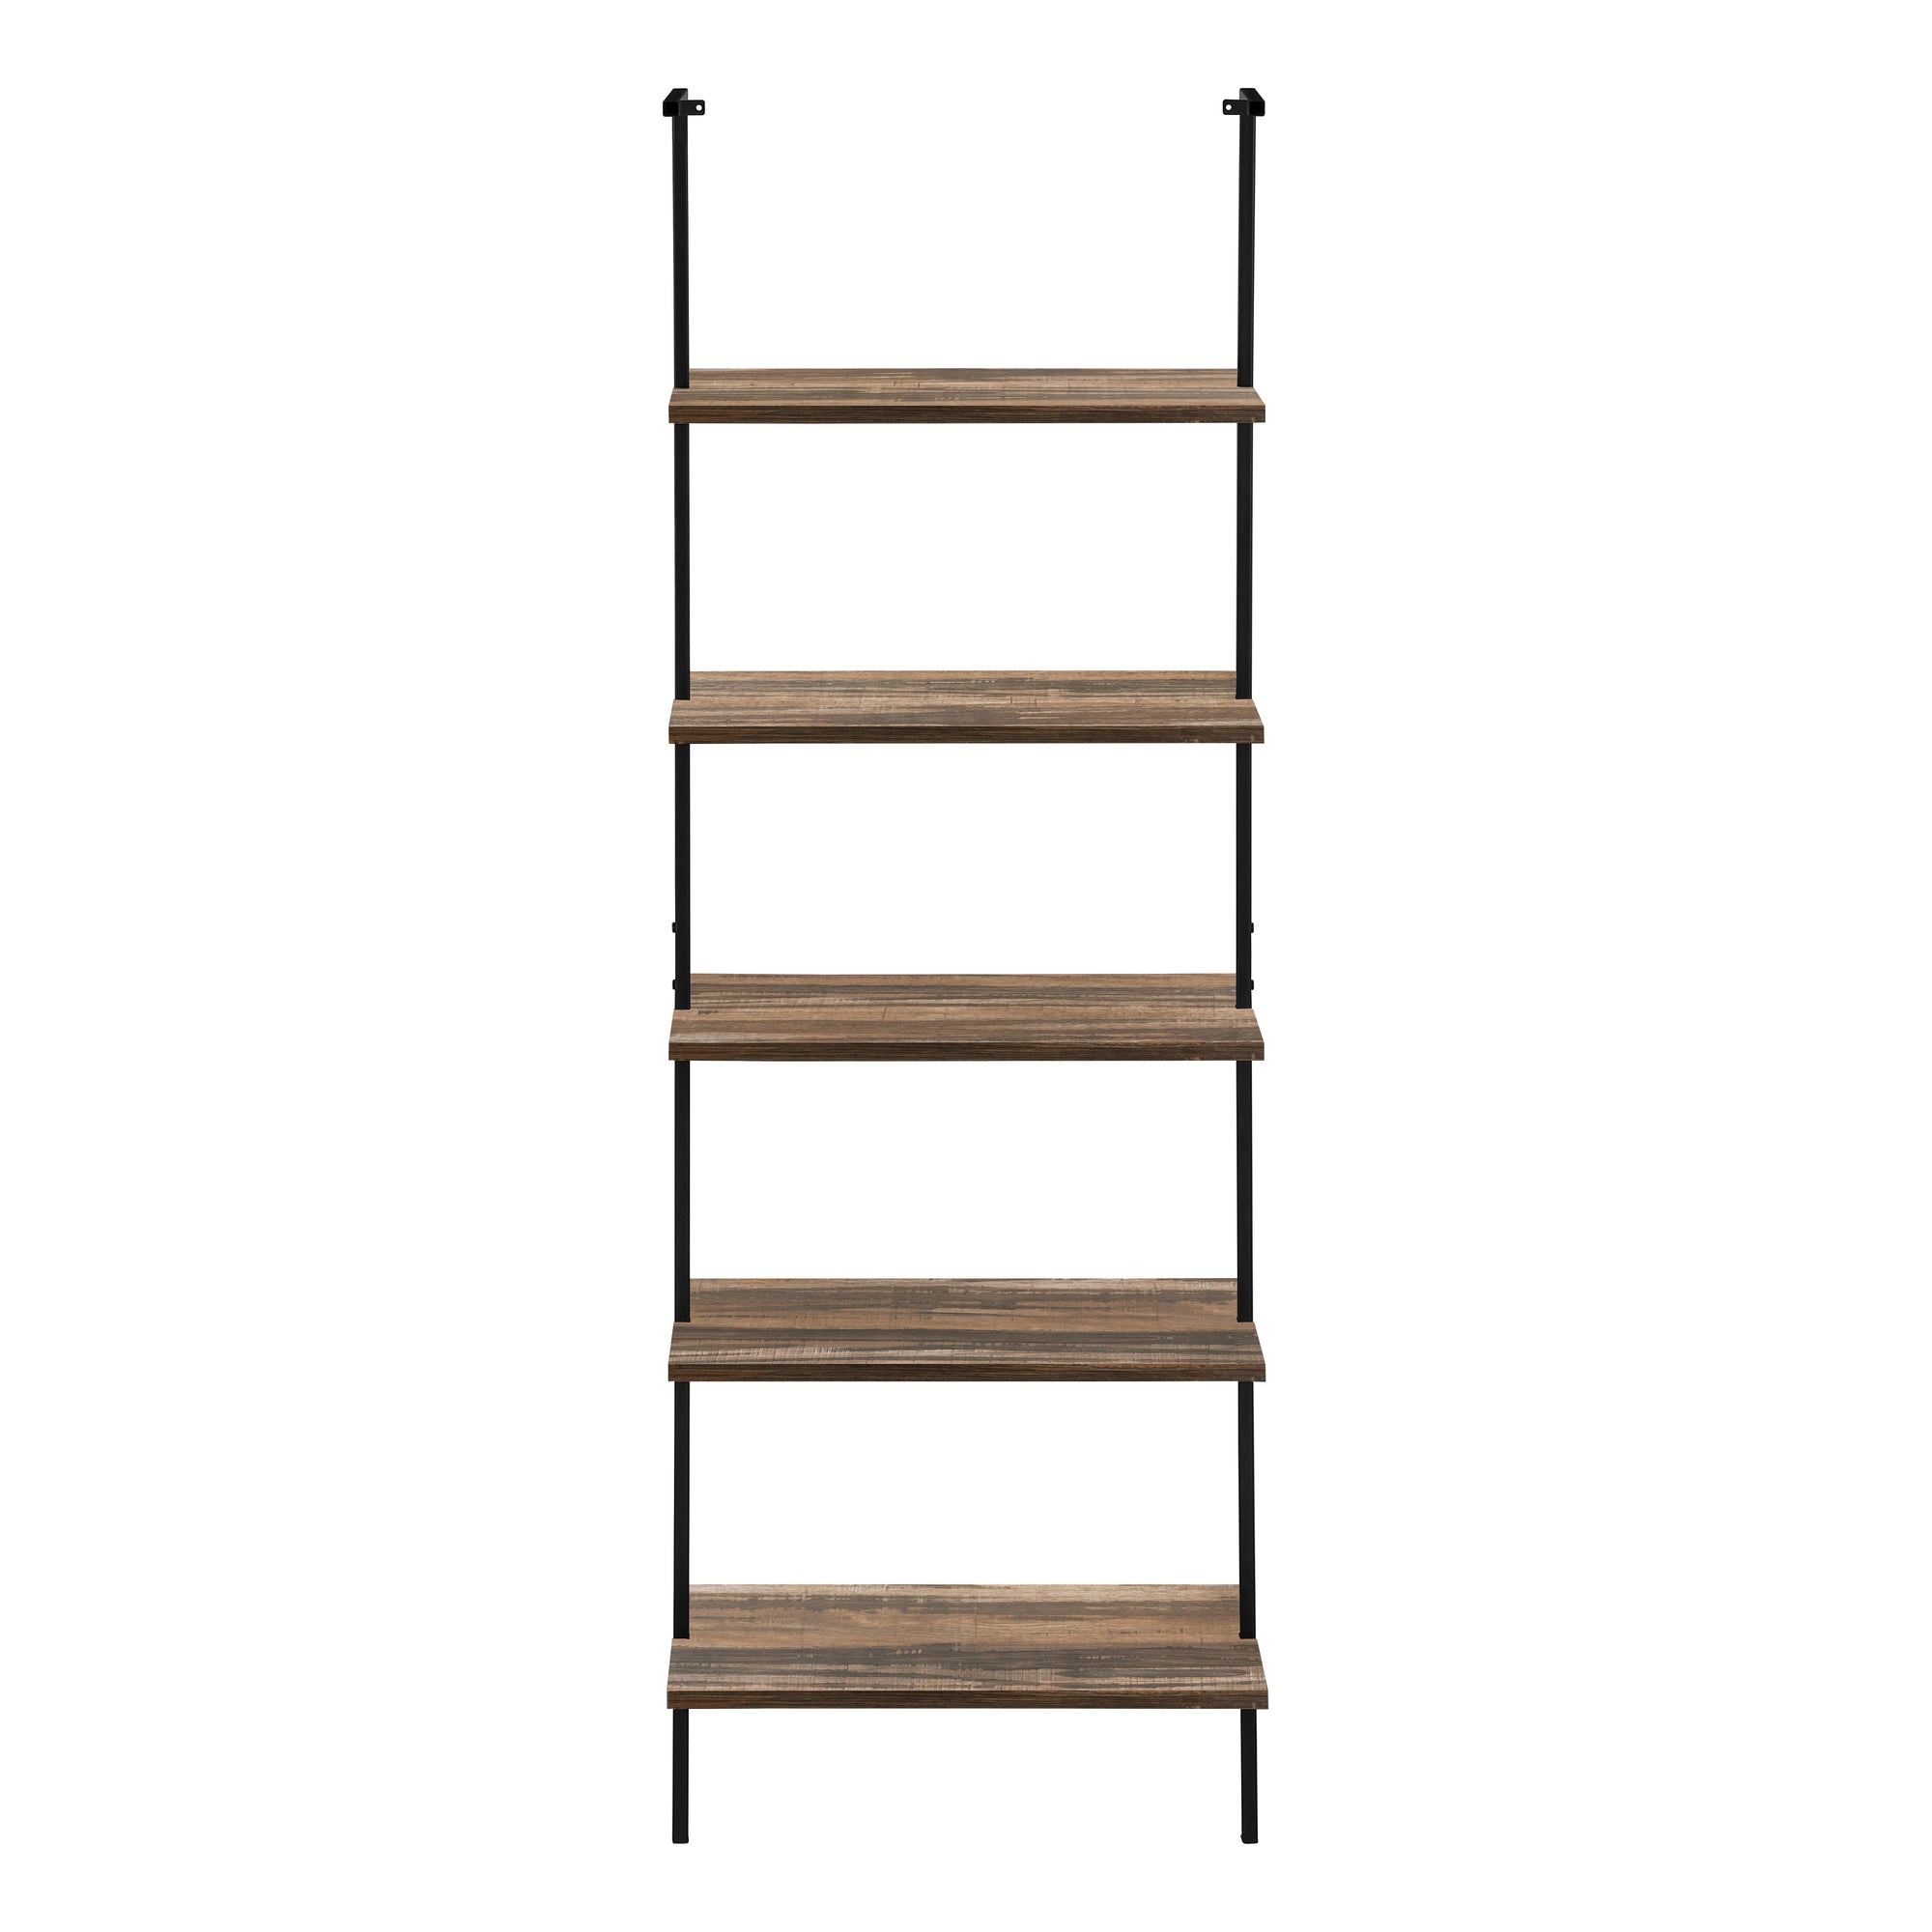 MN-243680    Bookcase - 5 Tier Etagere Ladder Bookshelf - Metal Frame - 72"H - Medium Brown Reclaimed Wood-Look